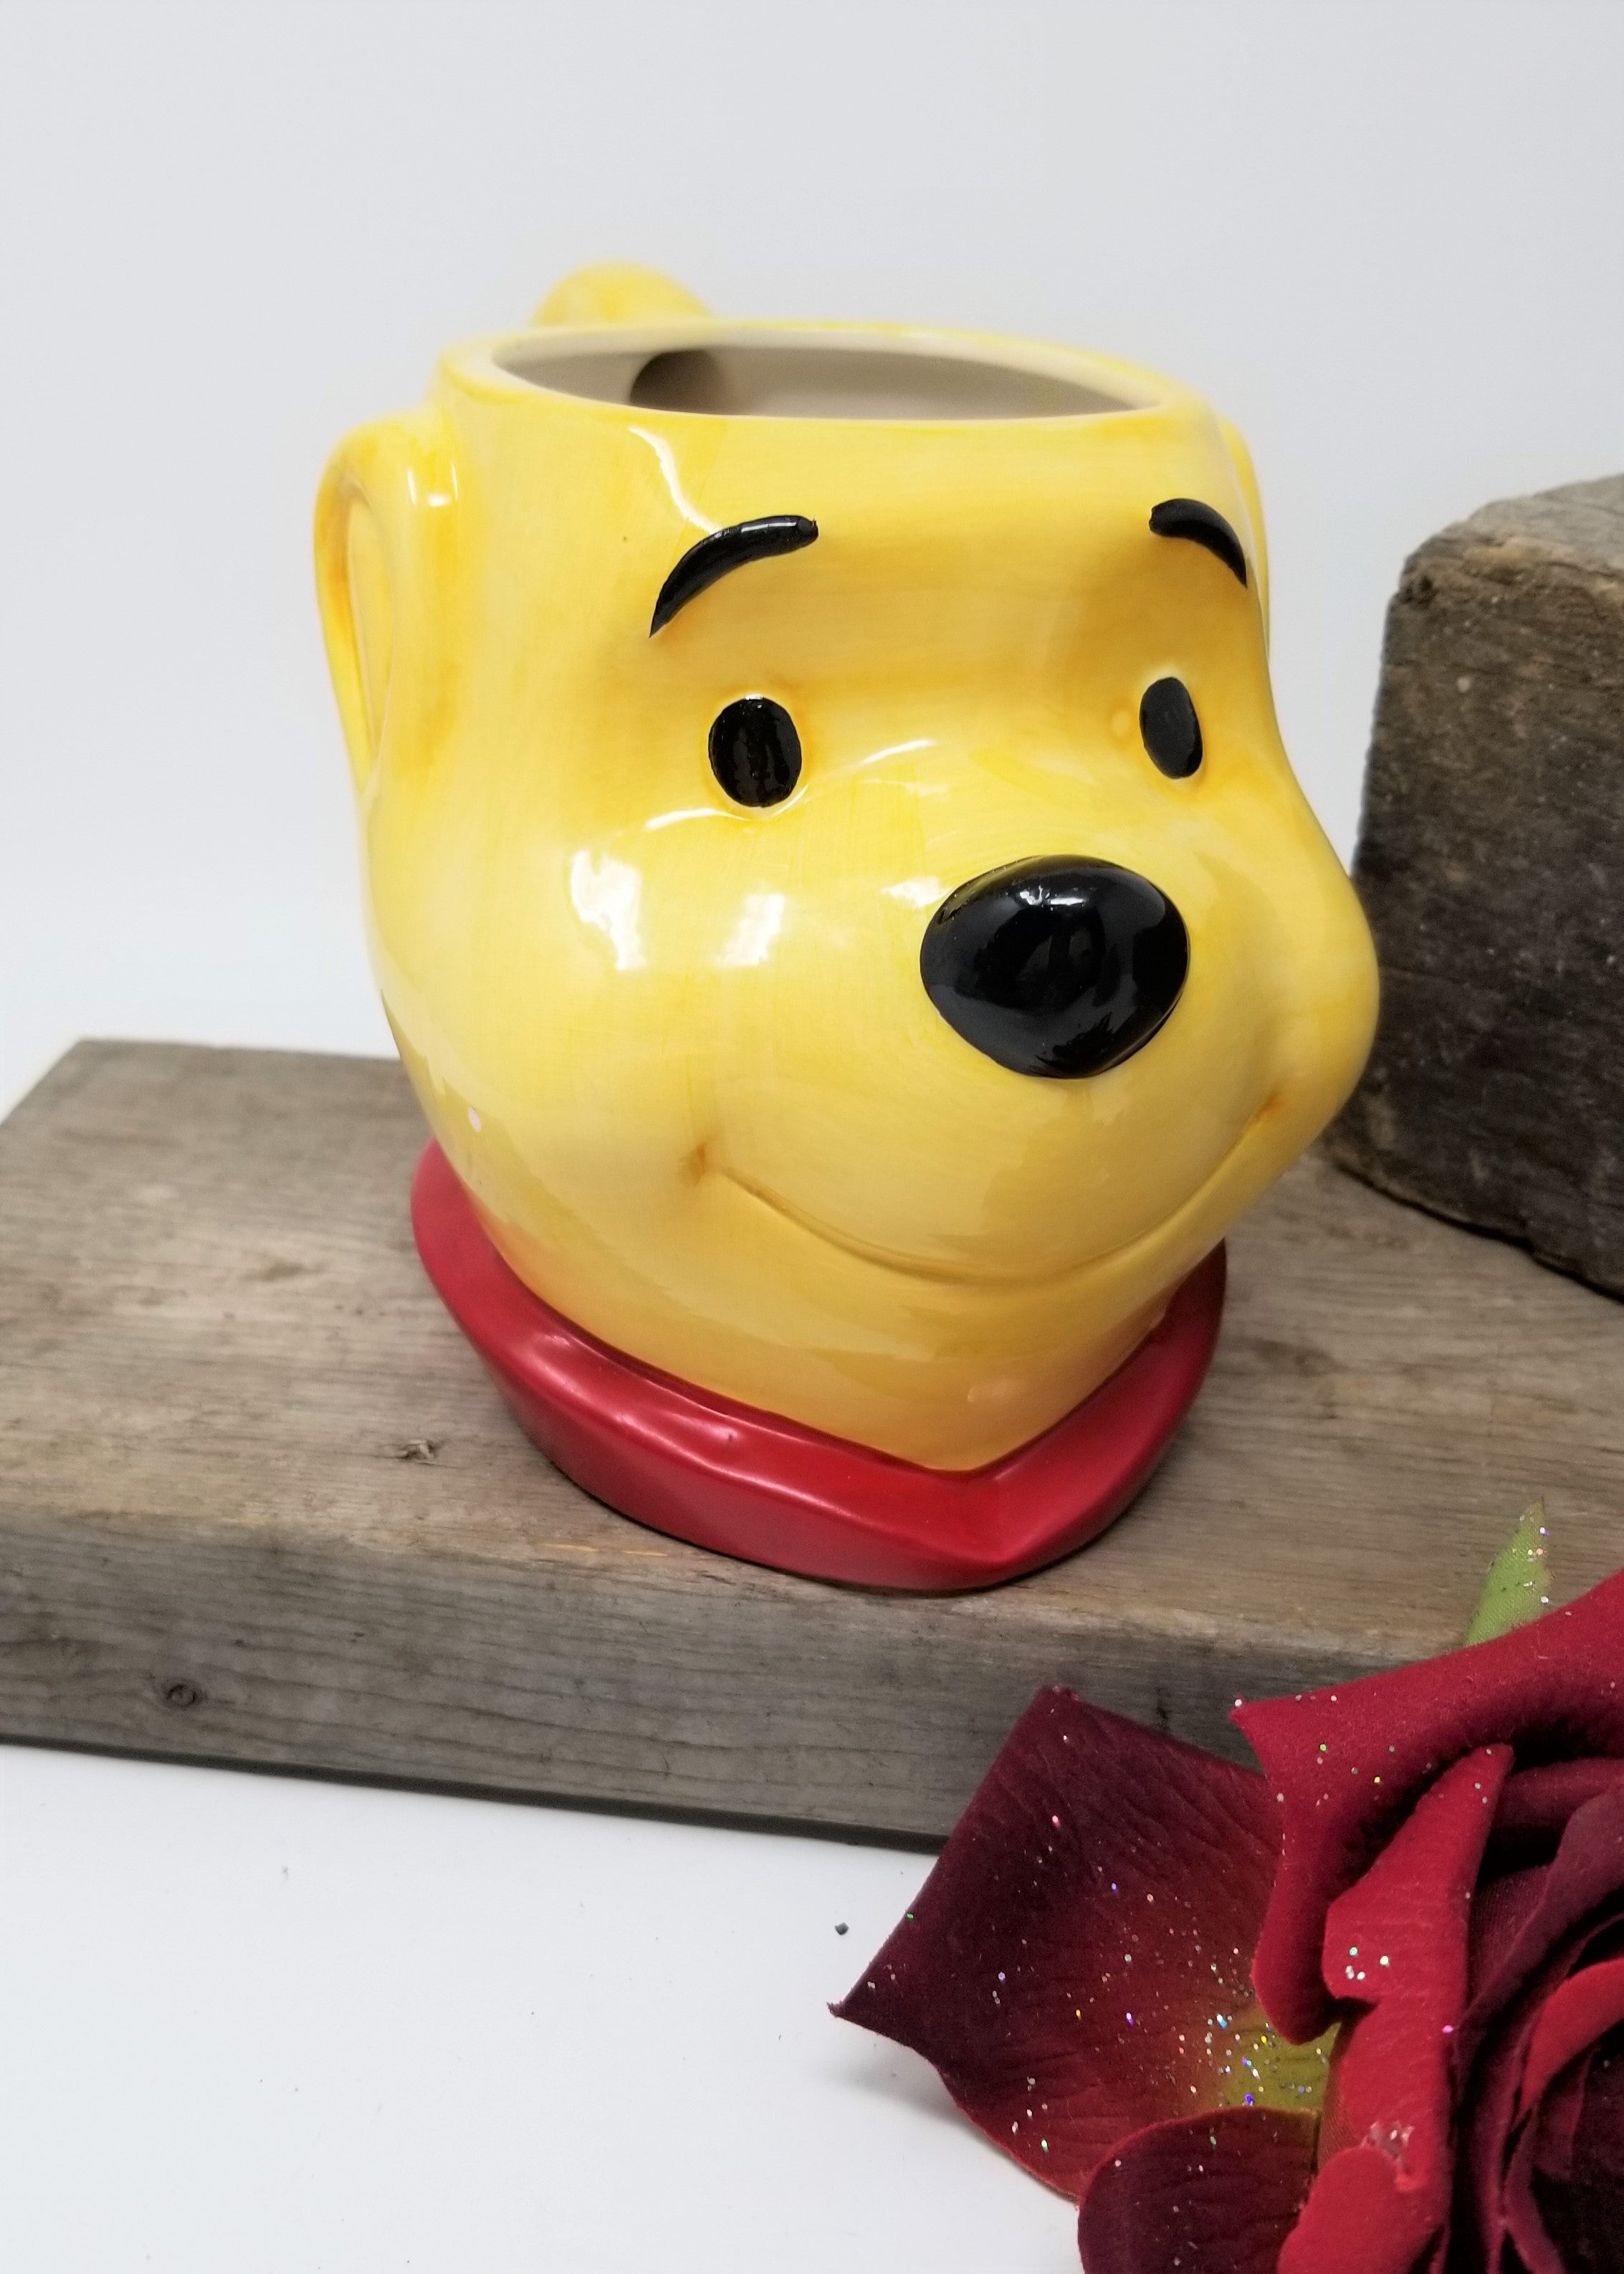 Vintage Disney Winnie the Pooh Mug Coffee Cup